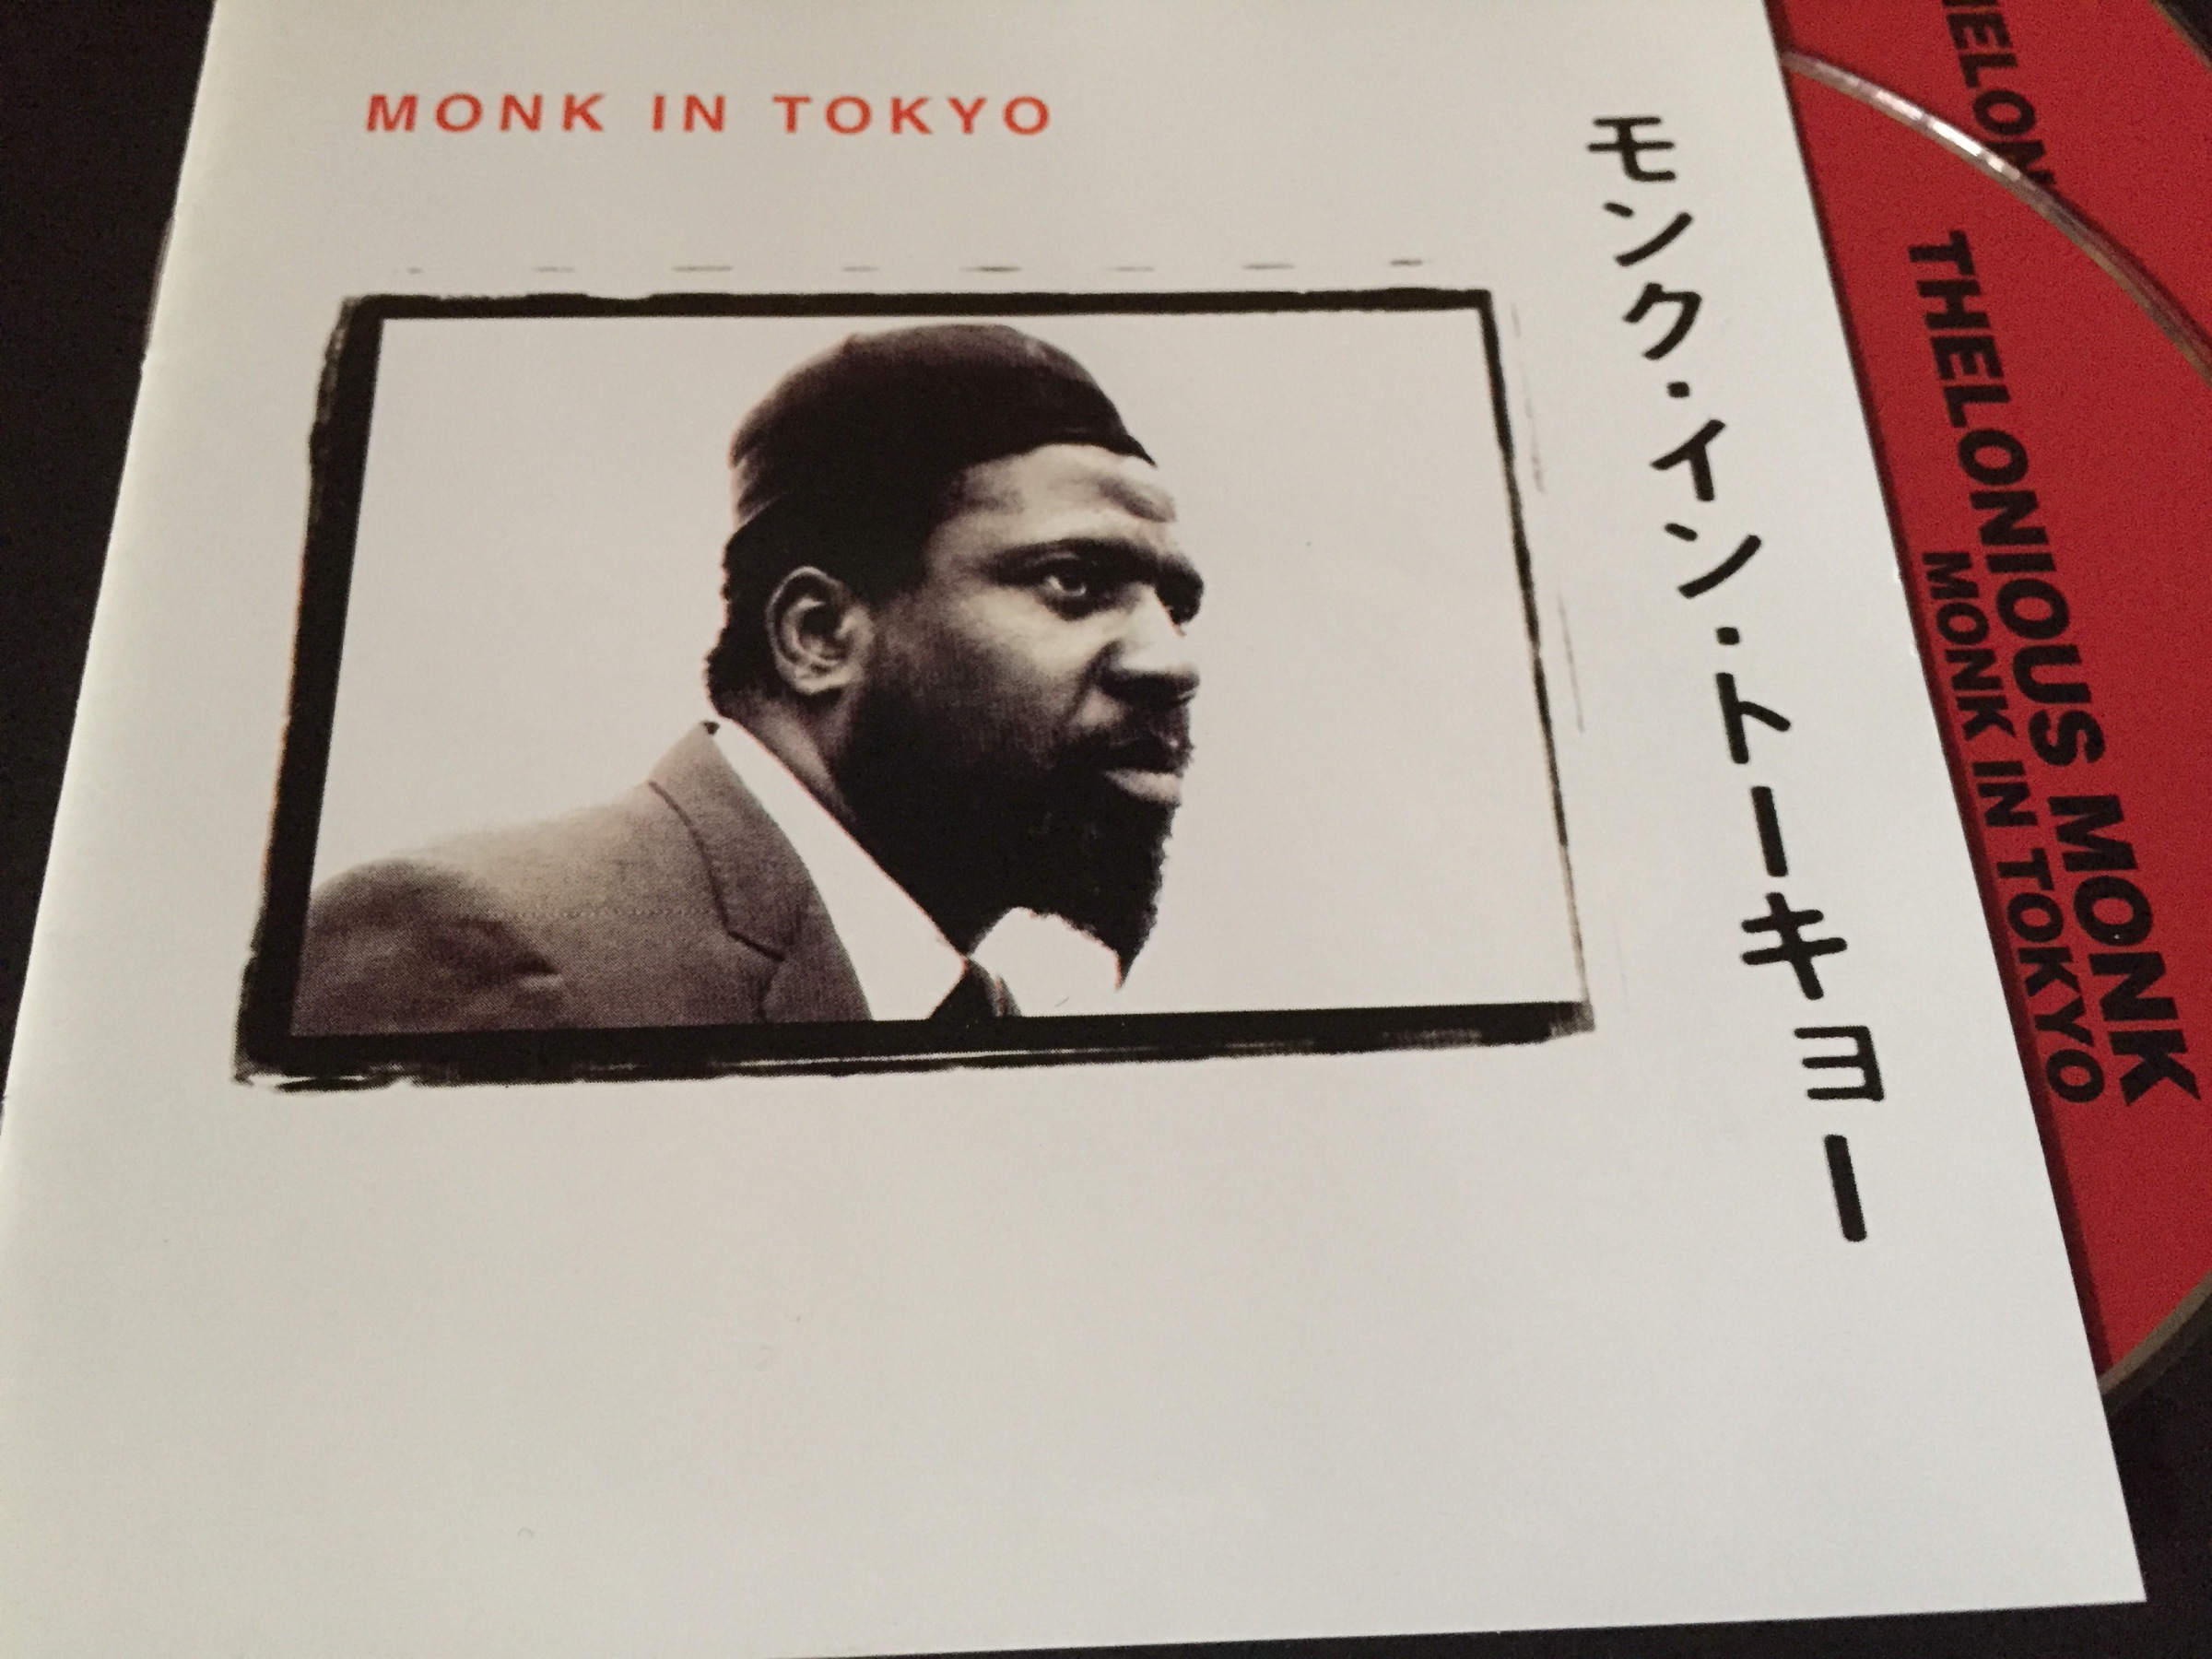 Thelonious Monk / Monk In Tokyo: 日々JAZZ的な生活